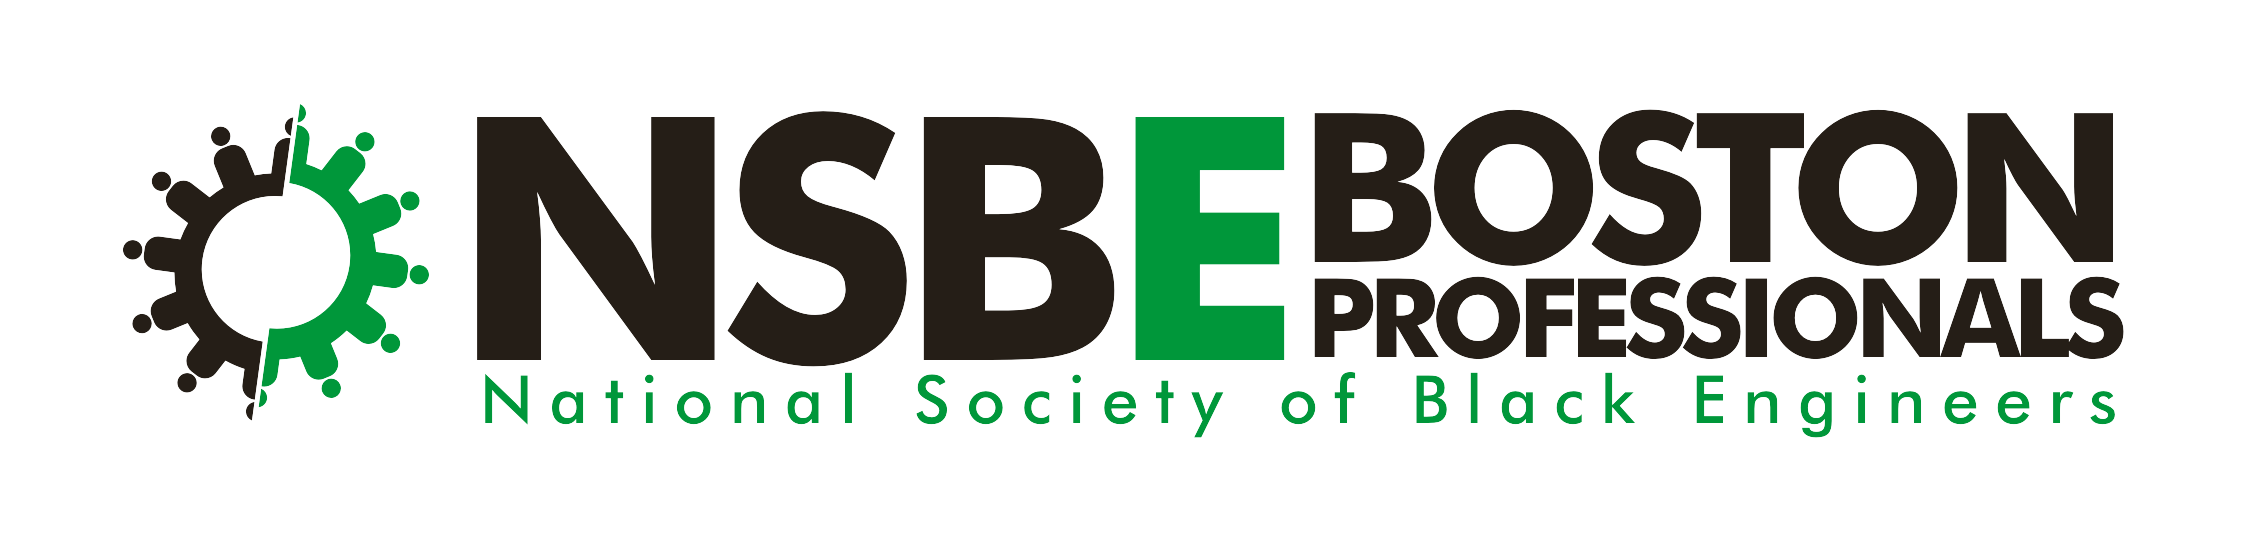 NSBE Boston Professionals Logo - transparent